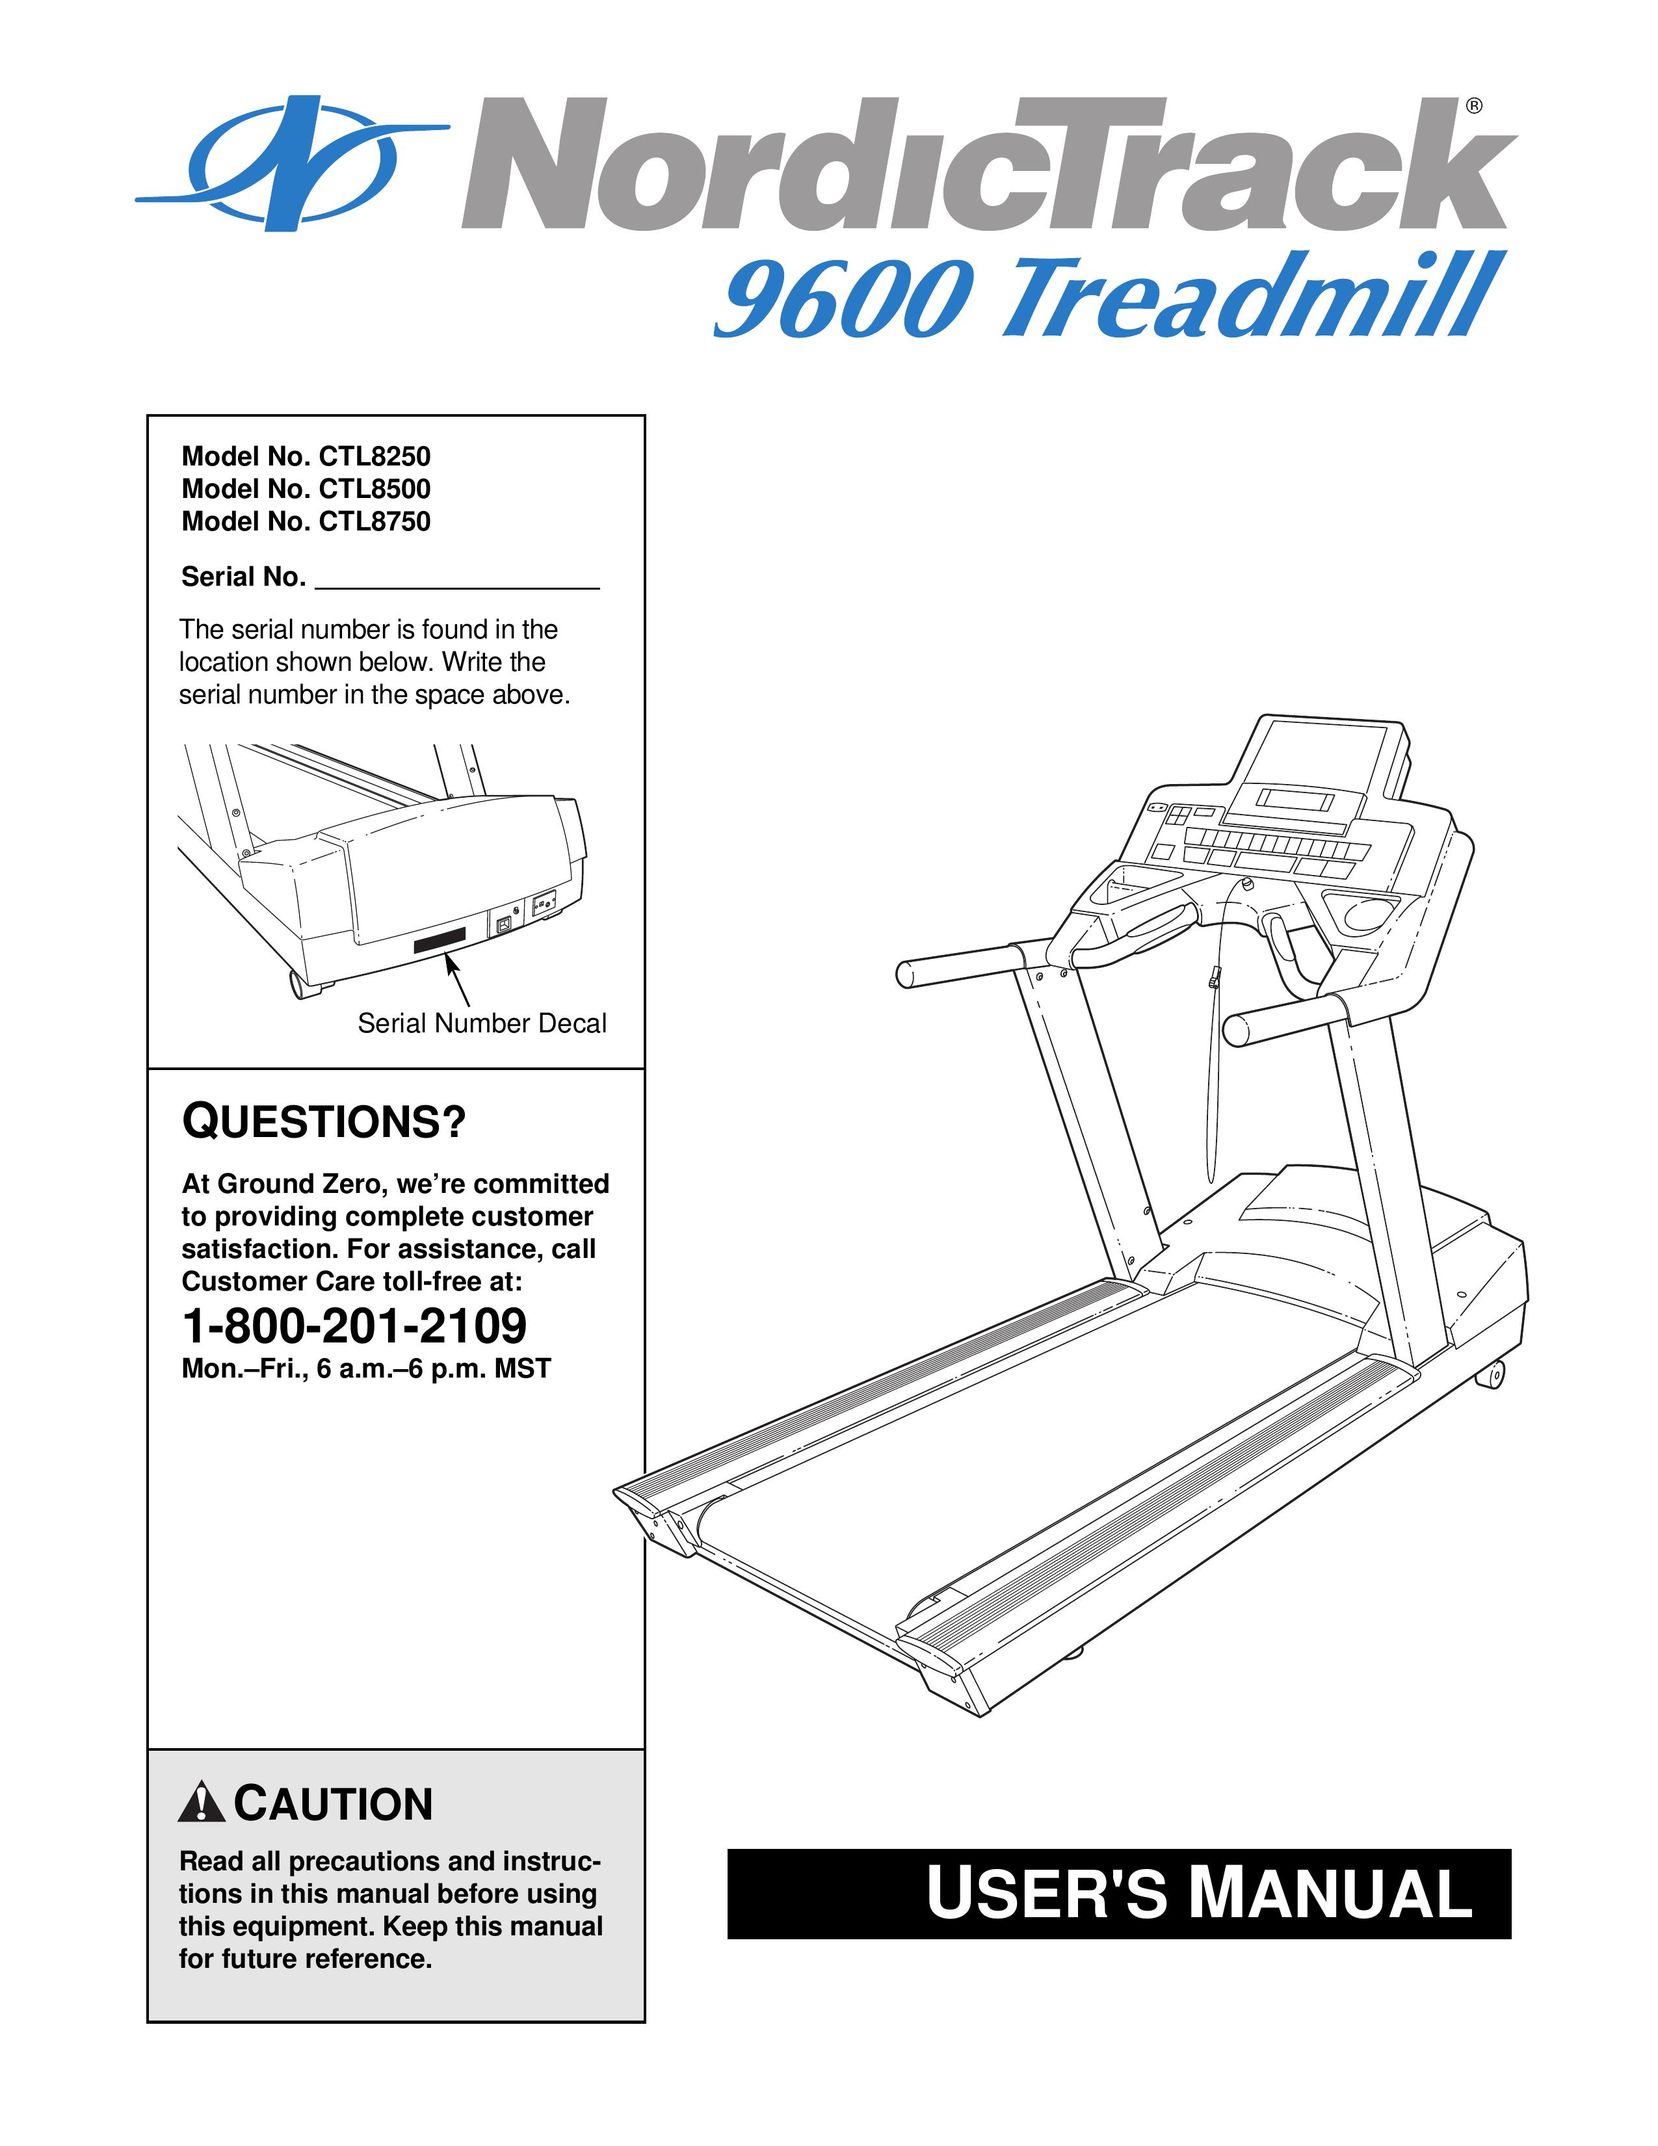 NordicTrack CTL8500 Treadmill User Manual